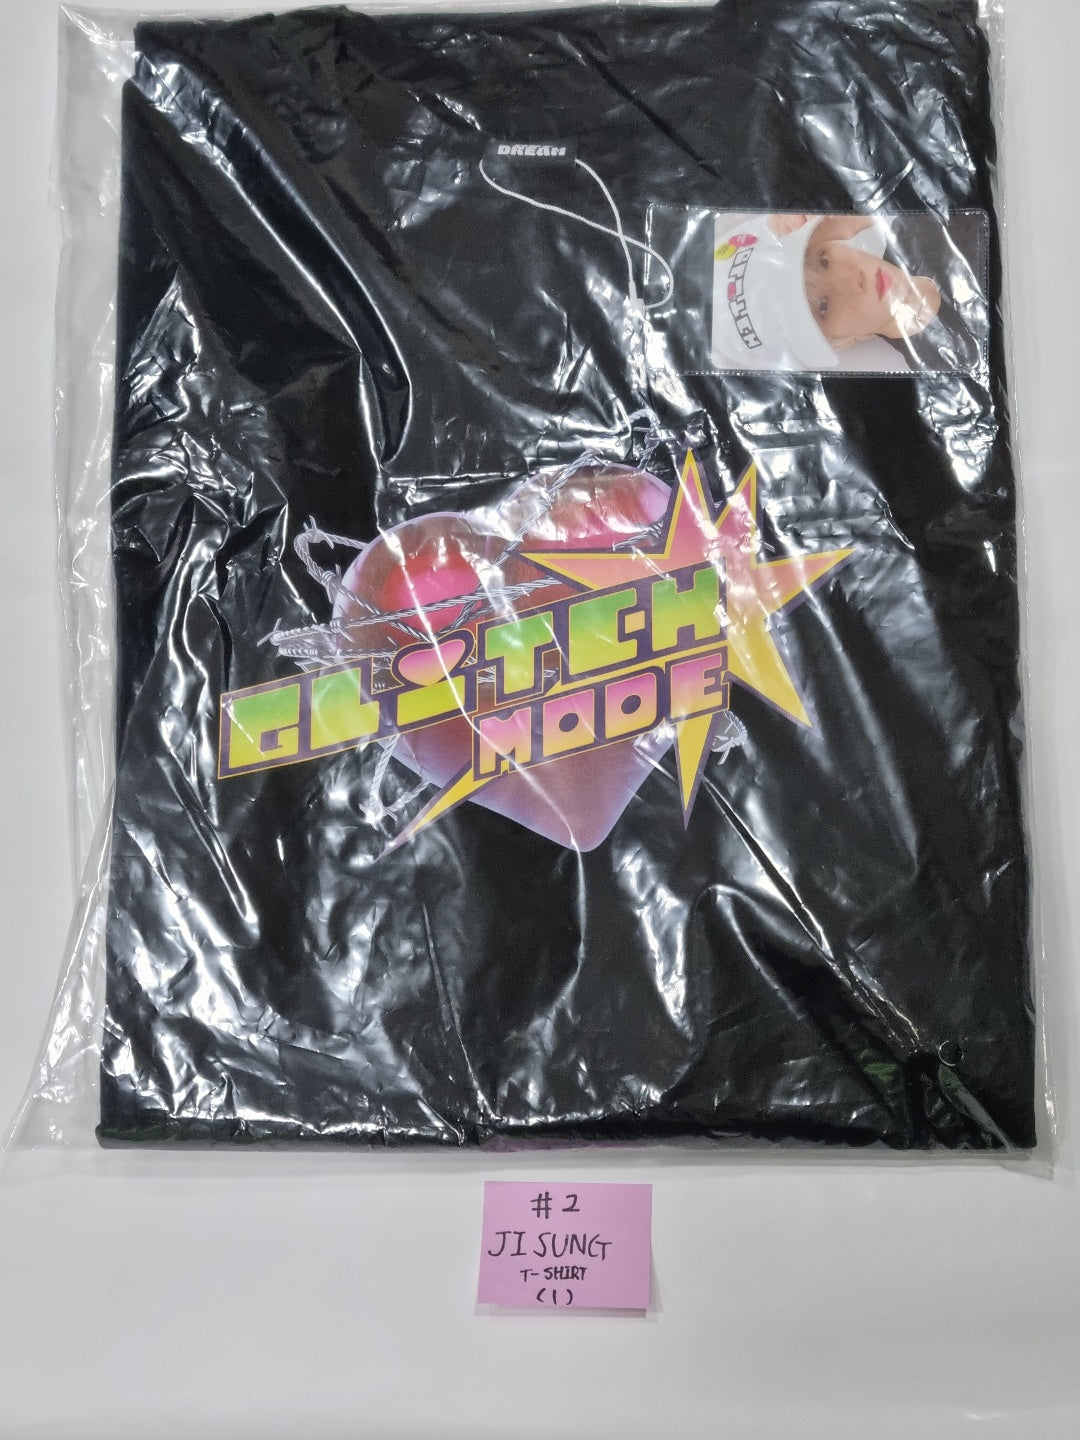 NCT Dream 'Glitch Mode' - Glitch Arcade Center Pop-Up Store MD [Tシャツ、アクリルキーホルダー、マッチングカードゲームセット] フォトカード付き [4/19更新]